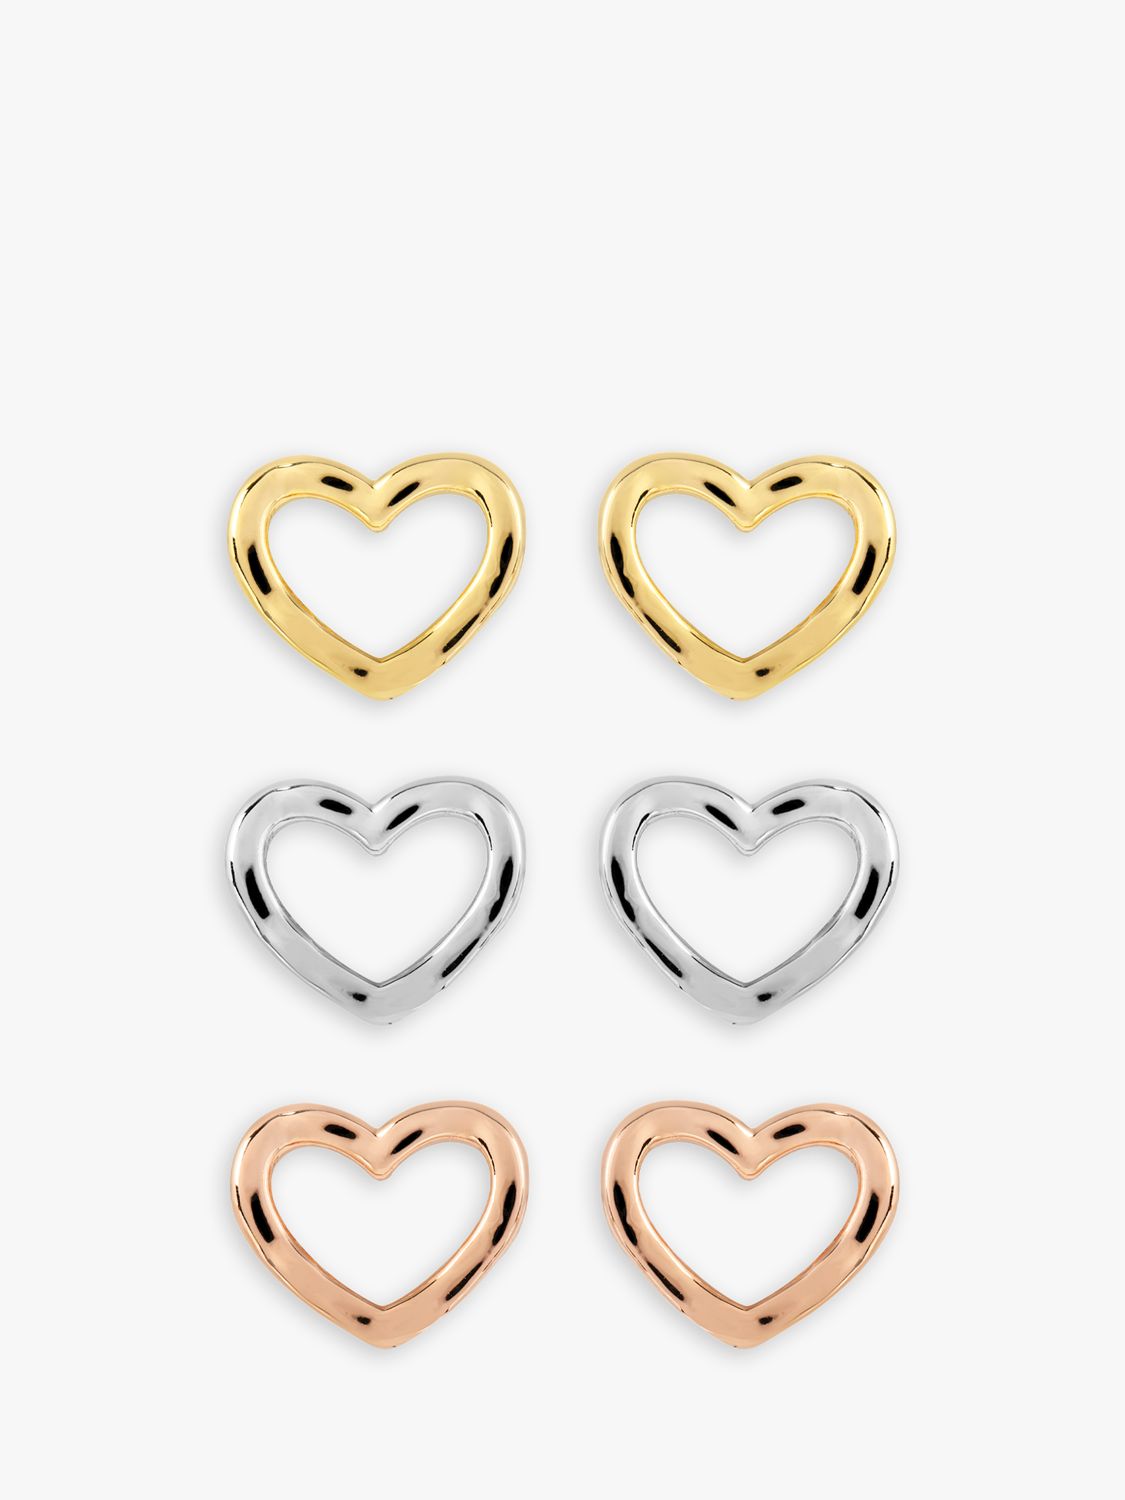 Joma Jewellery Florence Open Heart Stud Earrings, Set of 3, Multi at John Lewis & Partners